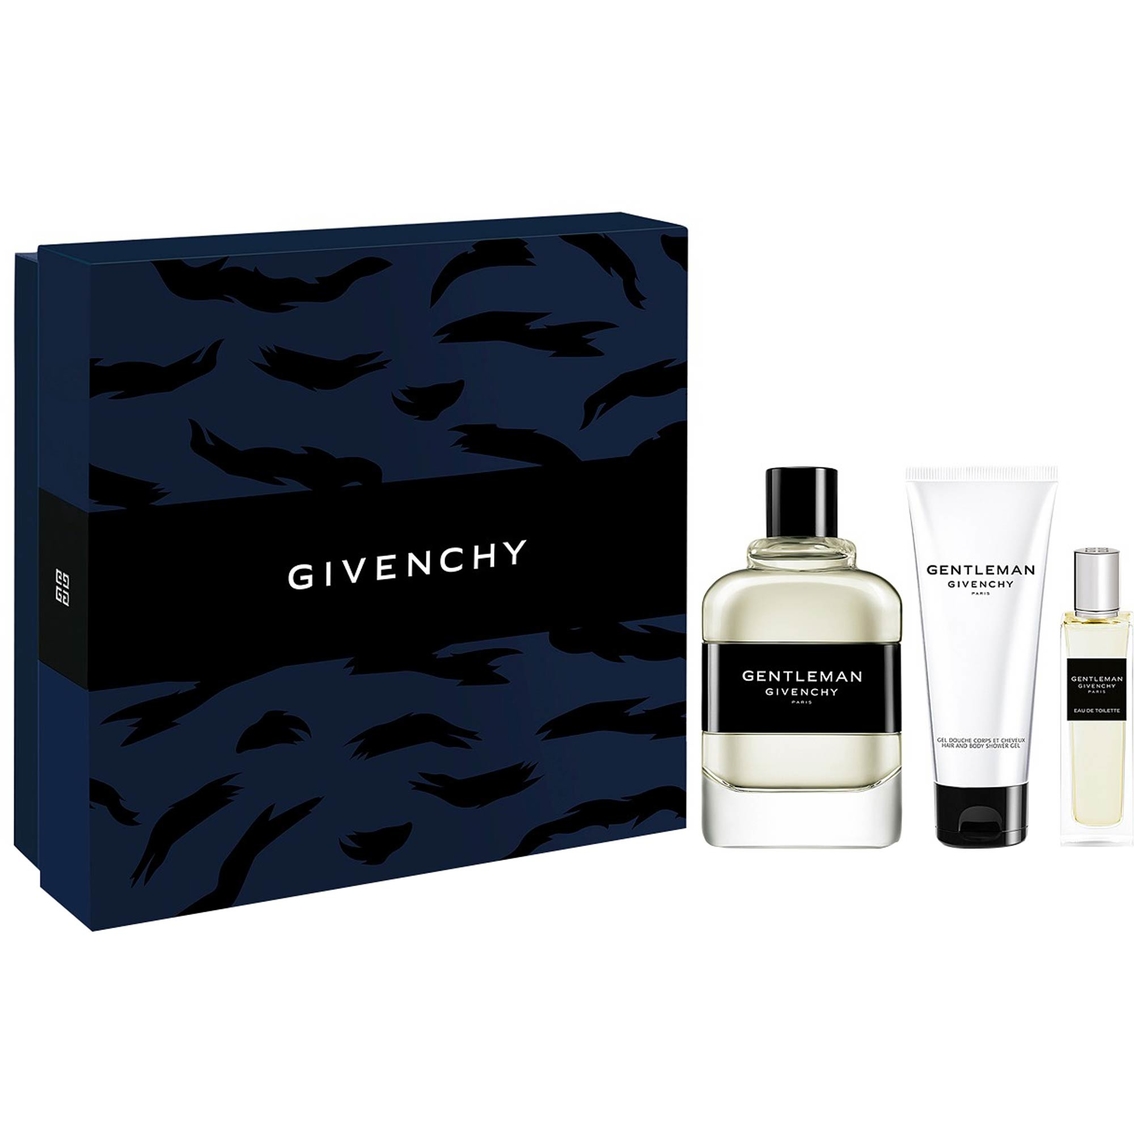 Givenchy Gentleman Eau De Toilette Gift Set | Gifts Sets For Him ...